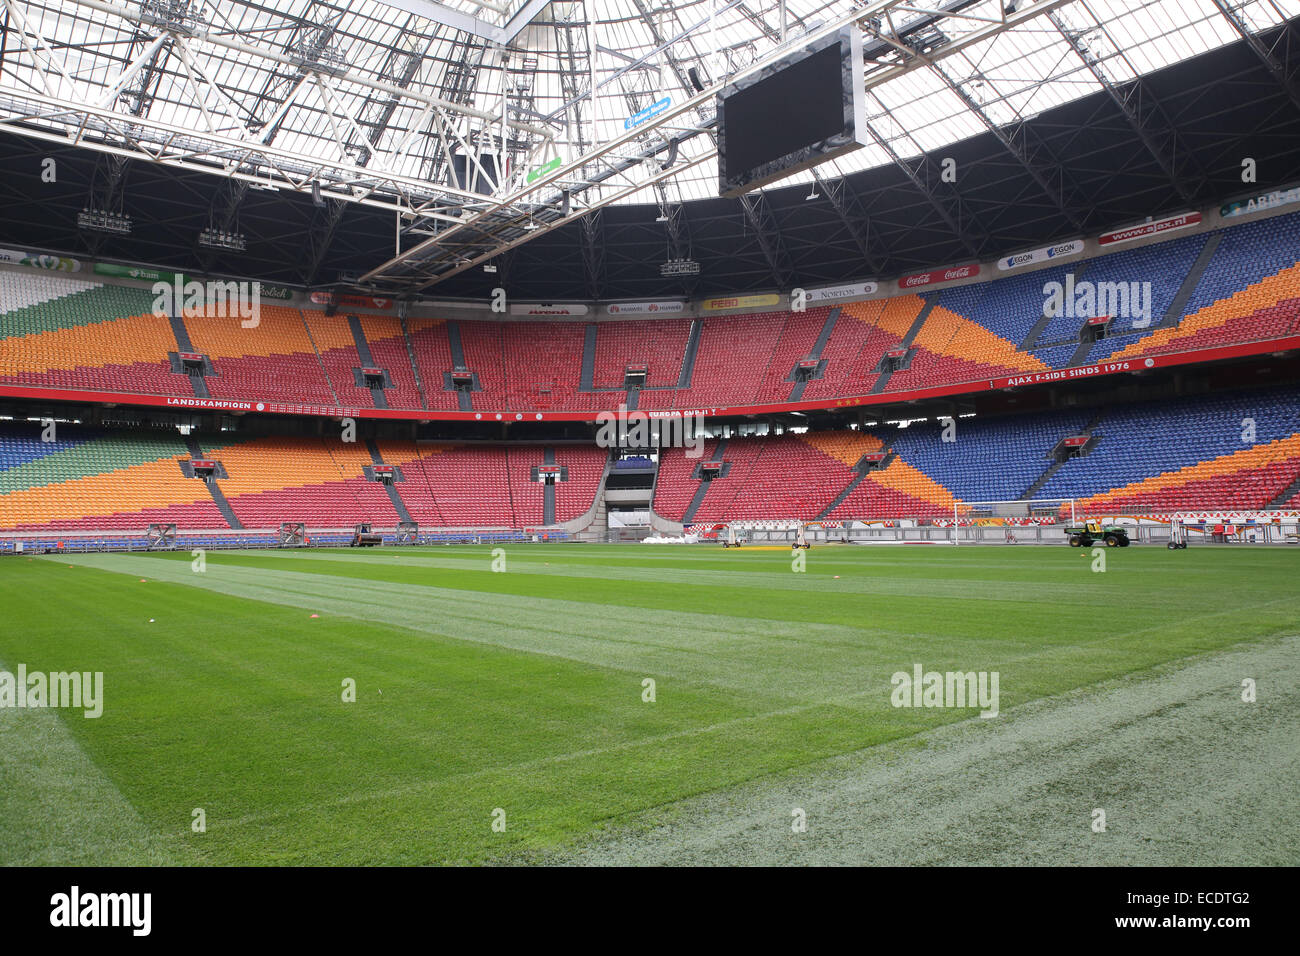 Amsterdam arena soccer football stadium empty Stock Photo